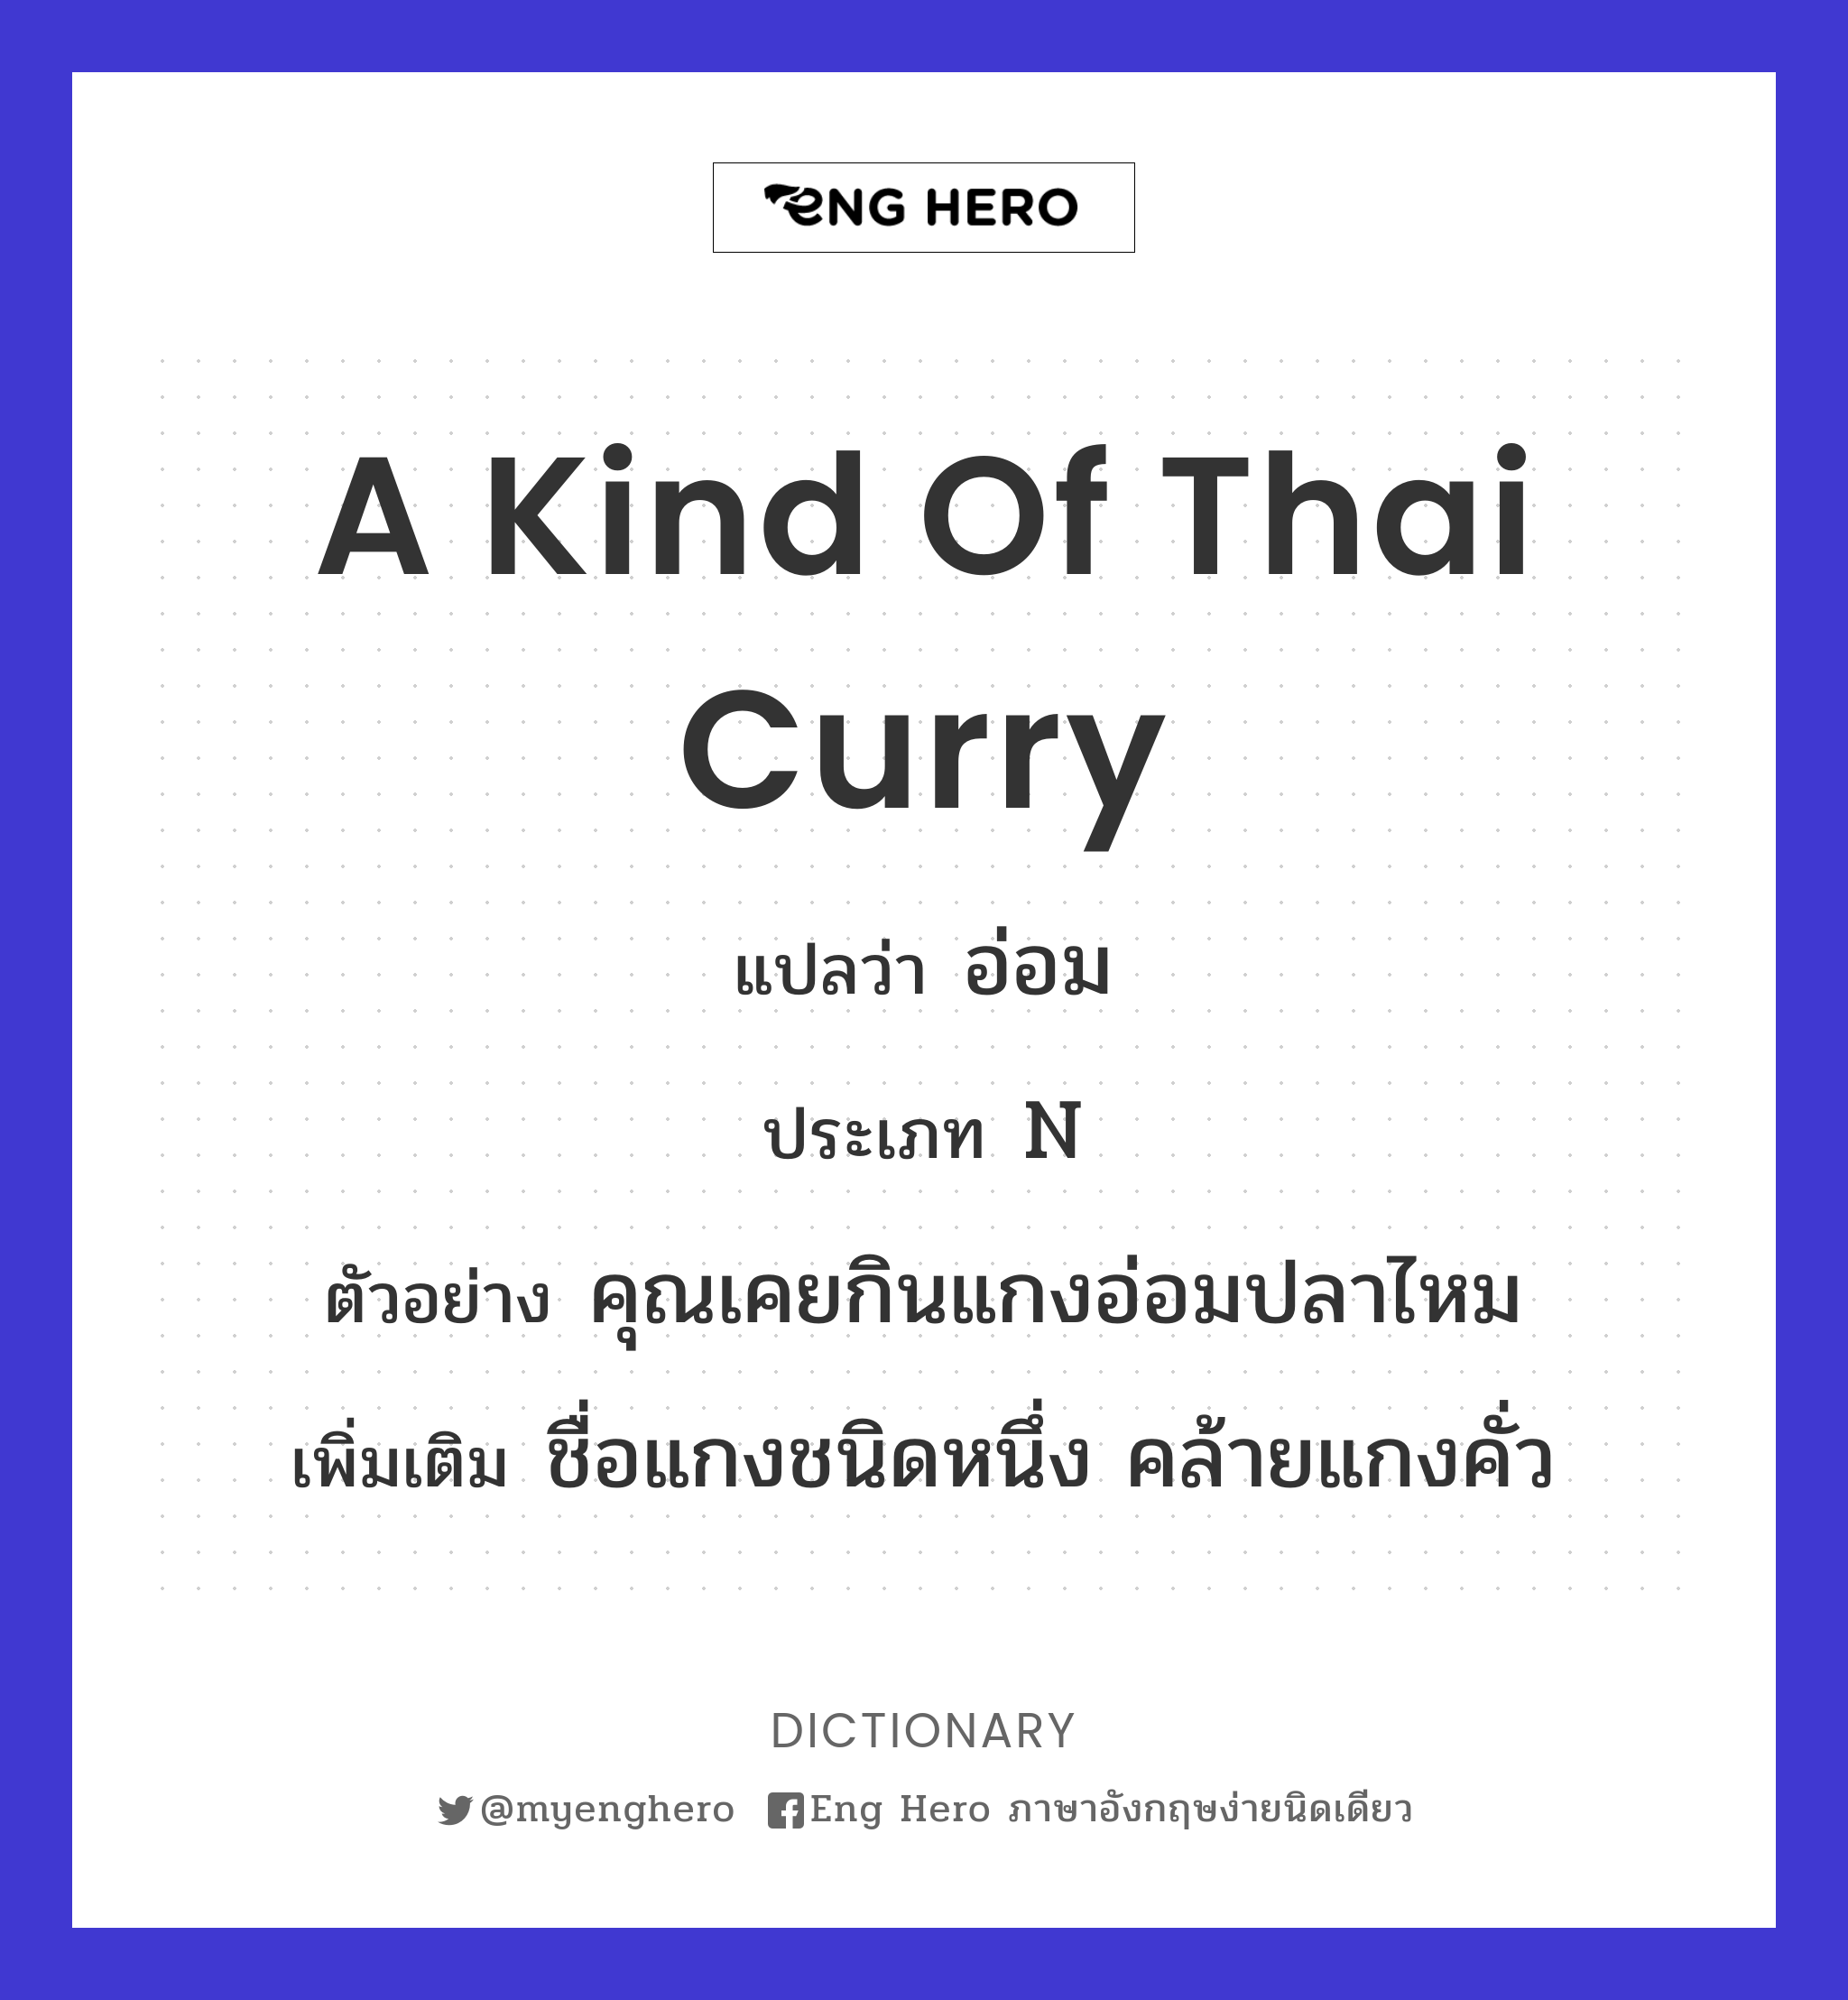 a kind of Thai curry